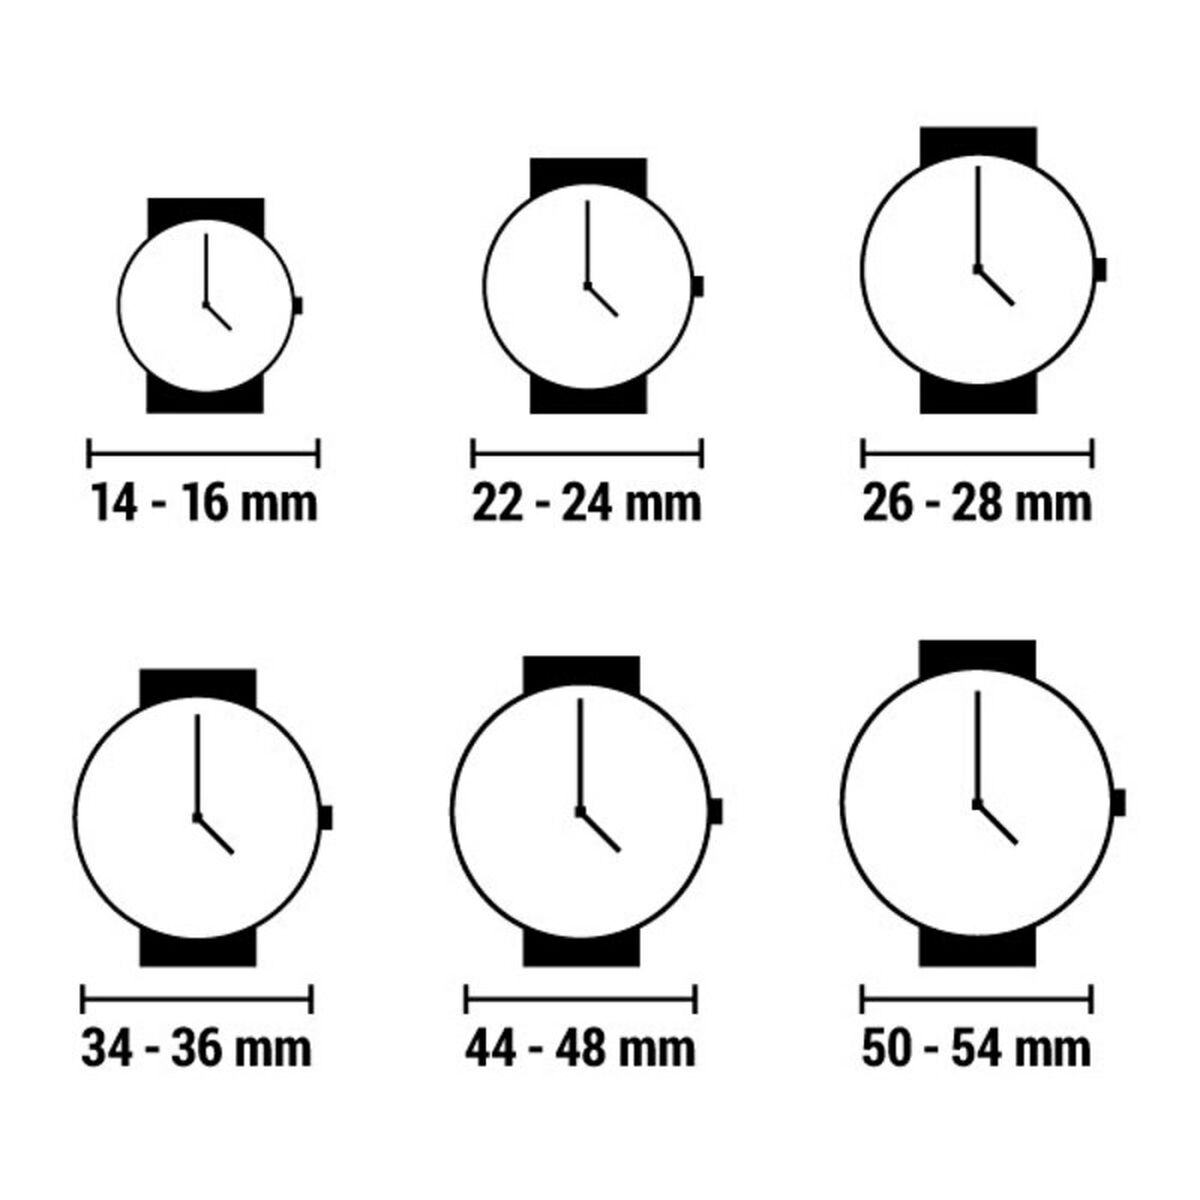 Unisex Watch Radiant RA89001 (38 mm)